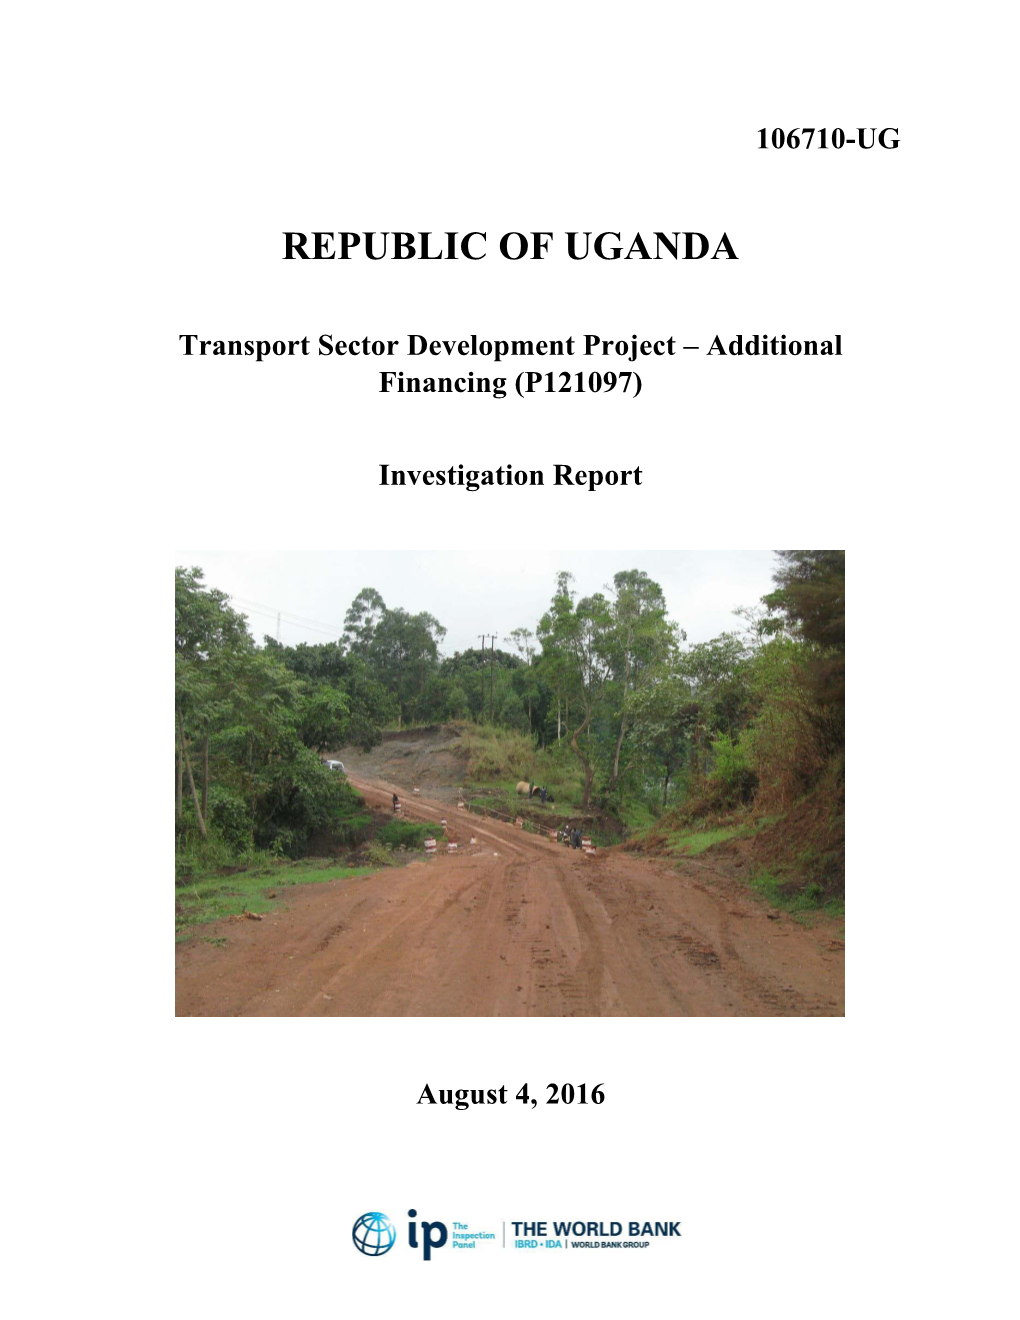 Inspection Panel Investigation Report. Republic of Uganda Transport